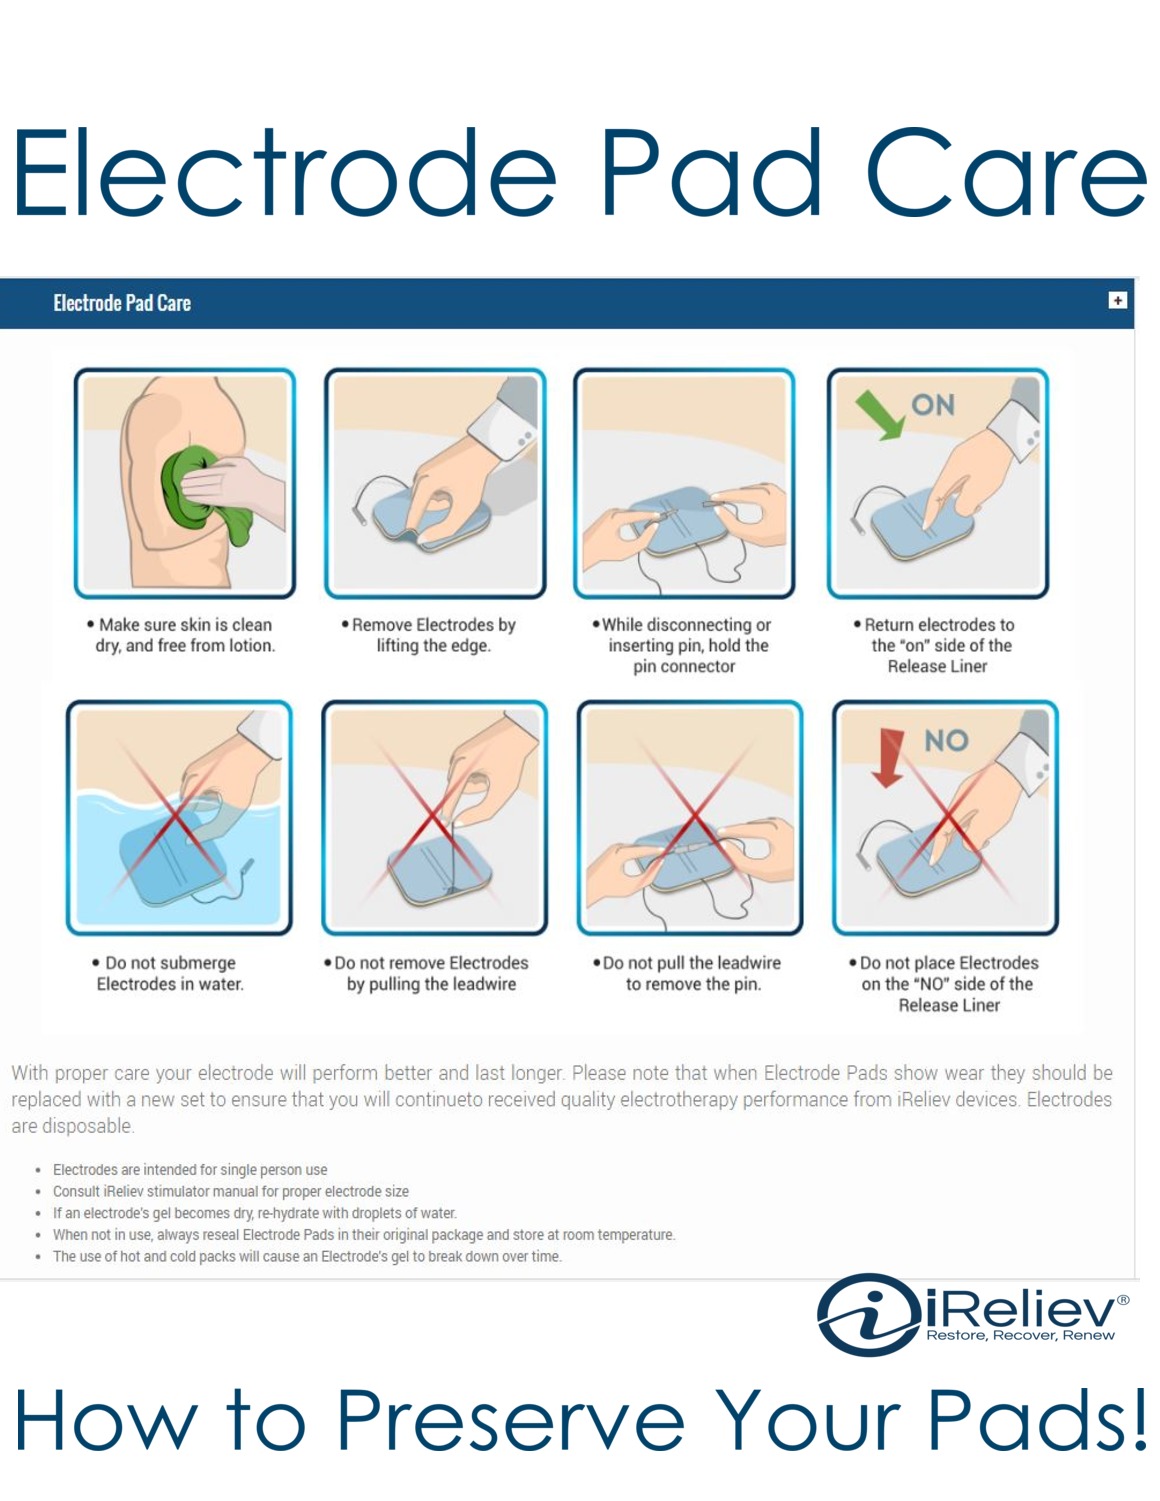 Electrode Pad Care_1160x1501